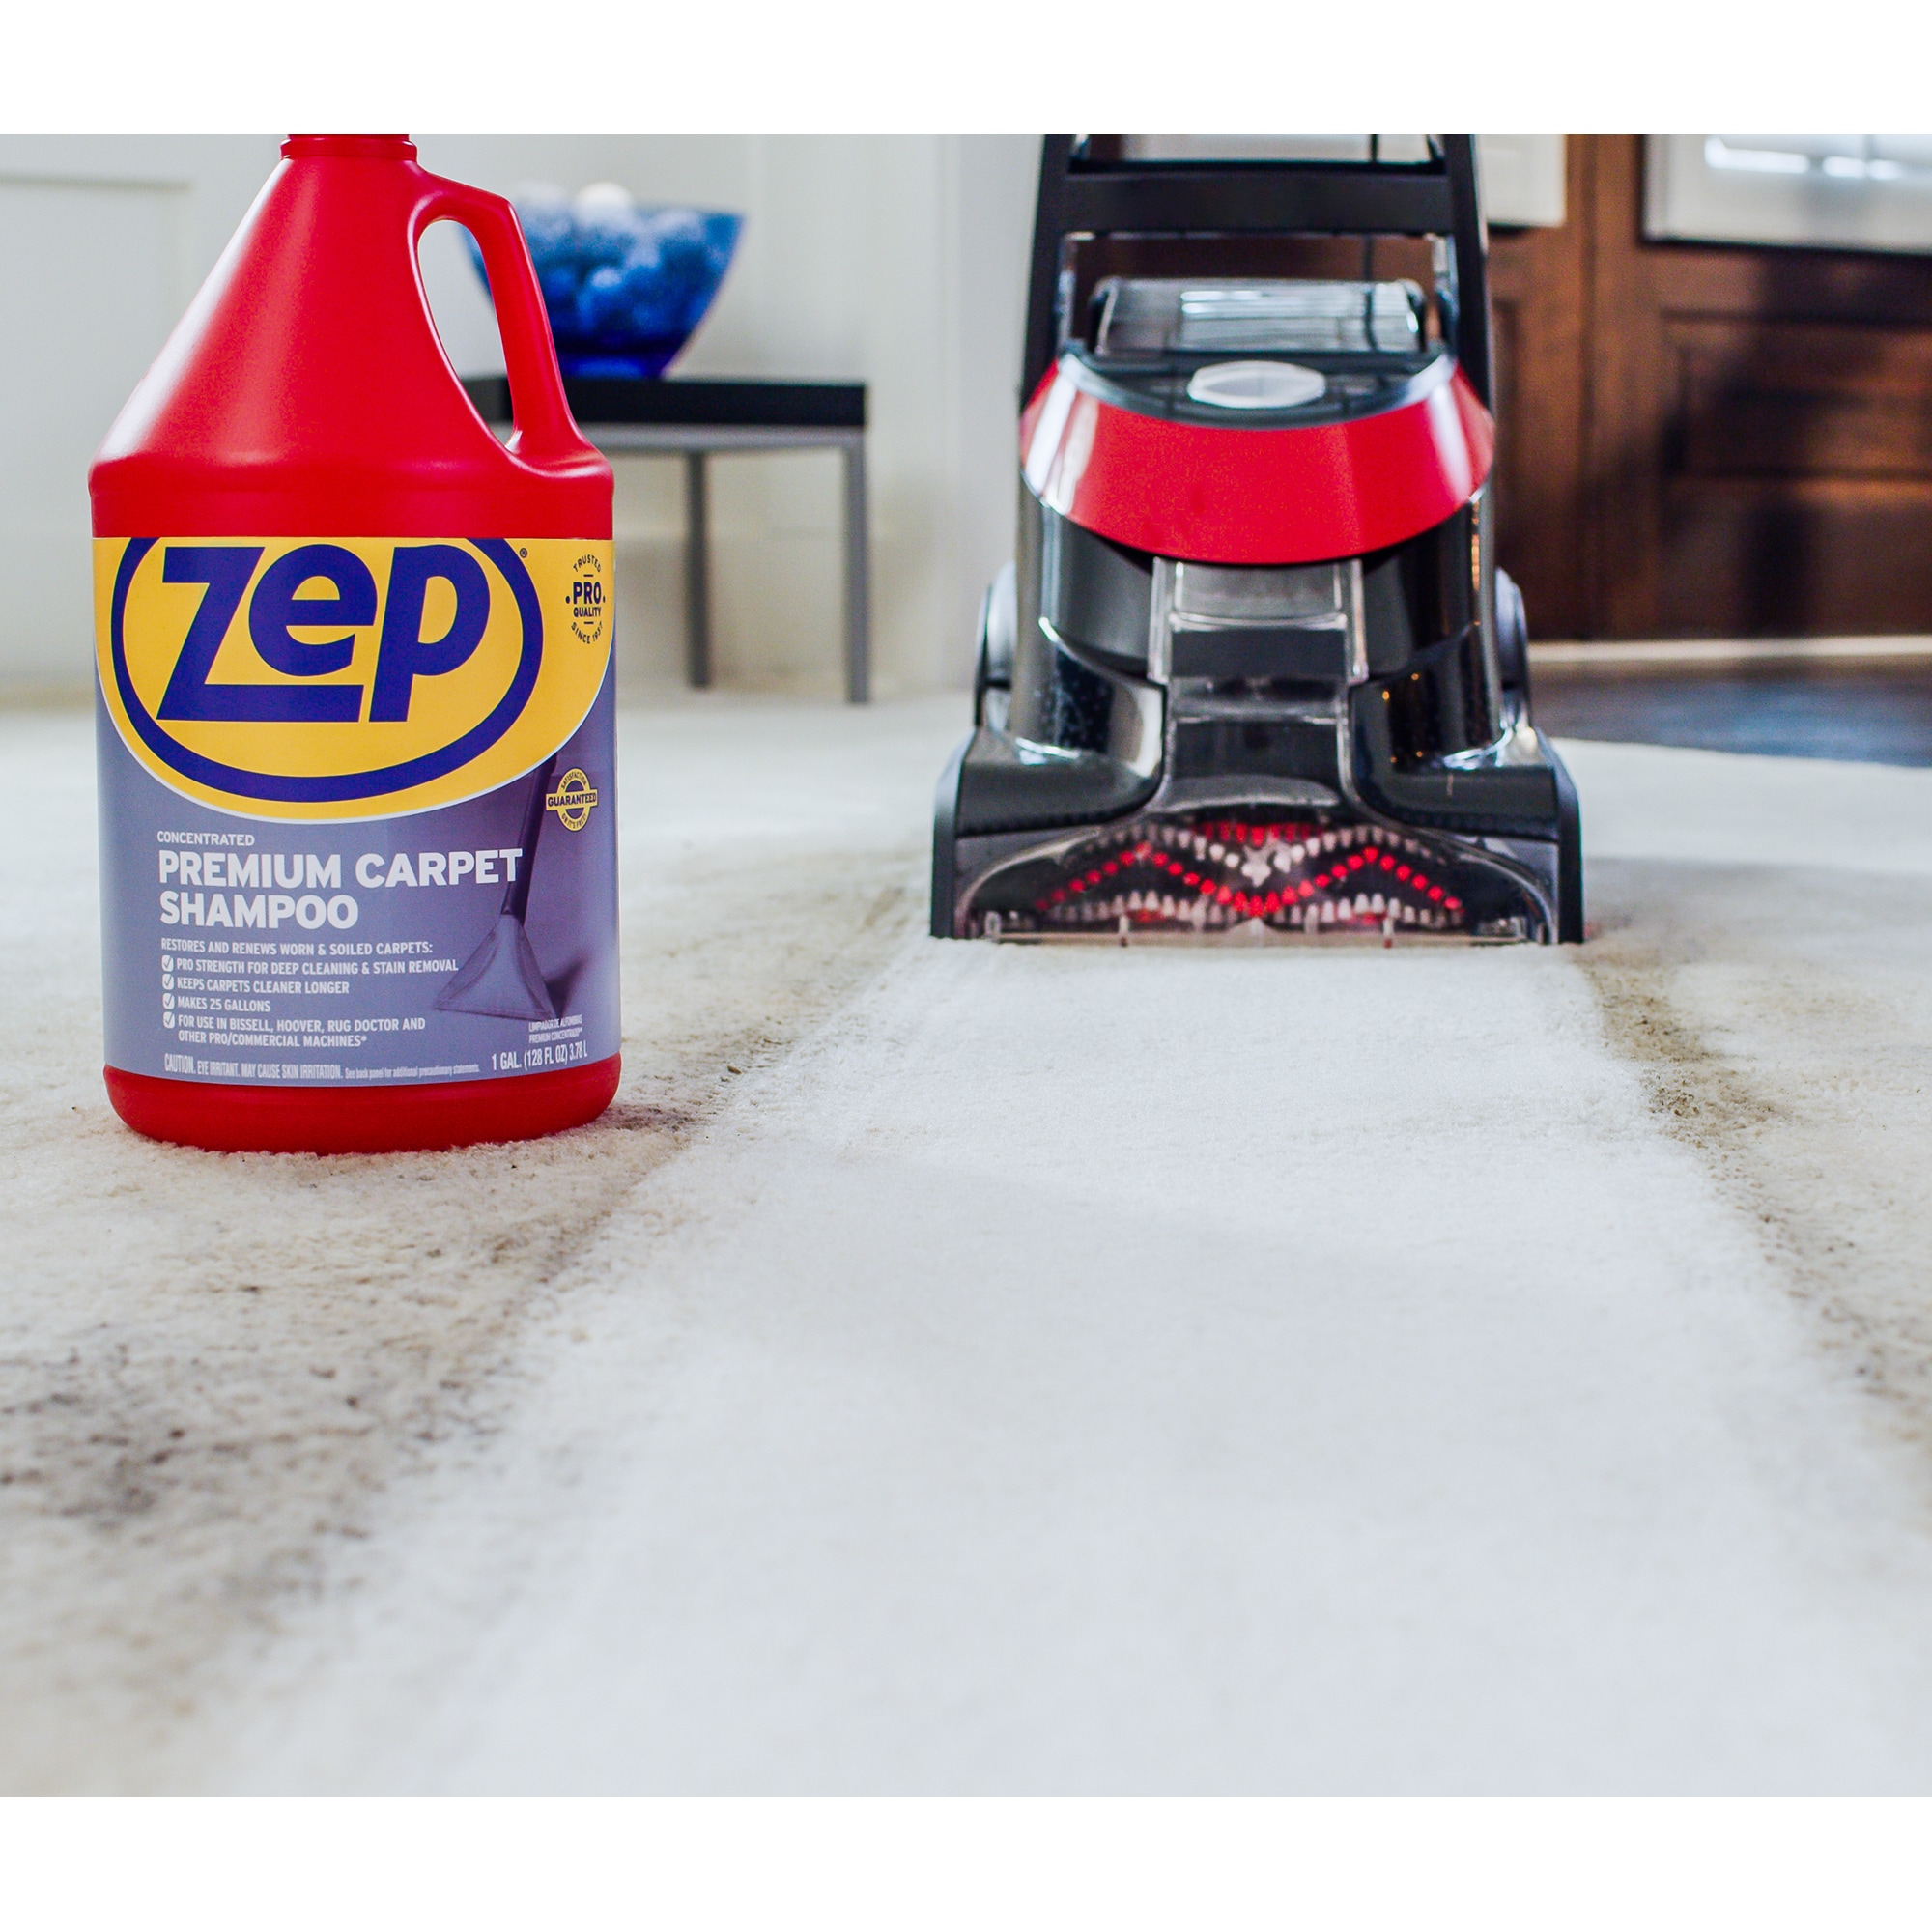 Zep Premium Carpet Shampoo Concentrate